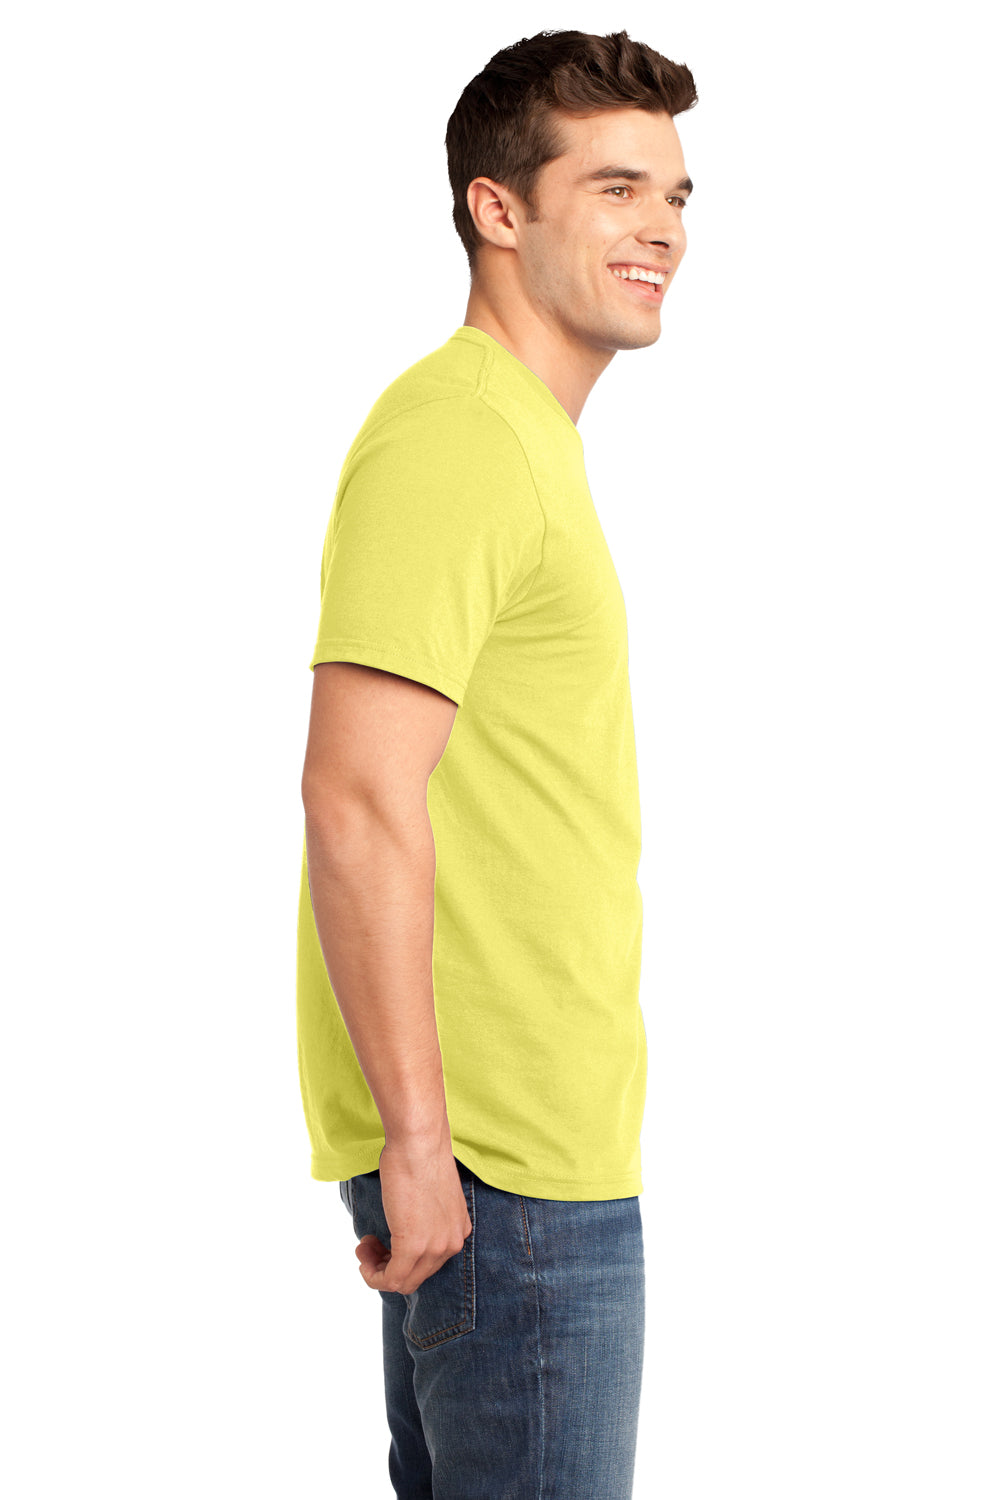 District DT6000 Mens Very Important Short Sleeve Crewneck T-Shirt Lemon Yellow Side